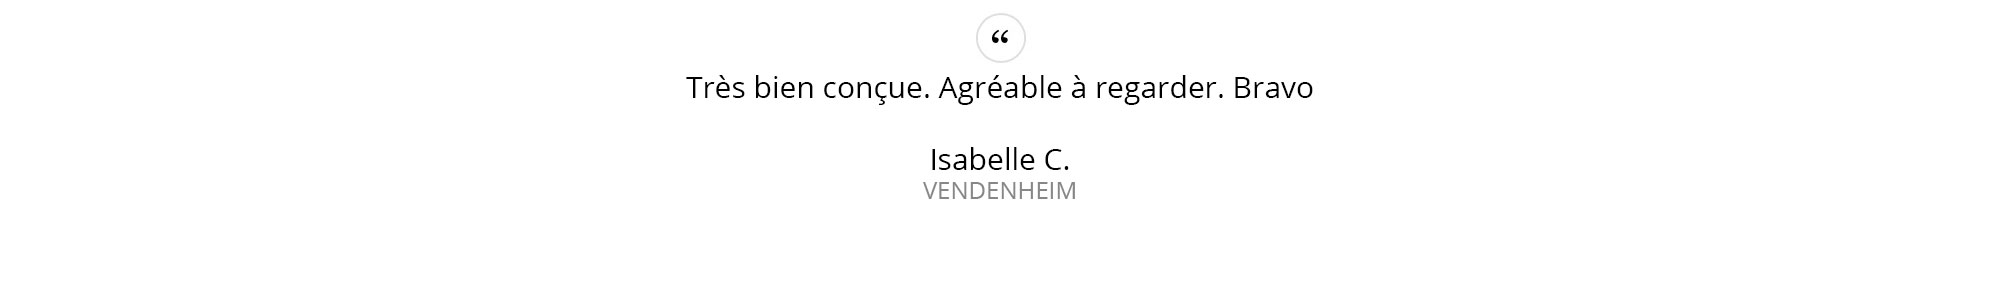 Isabelle-C.---VENDENHEIM